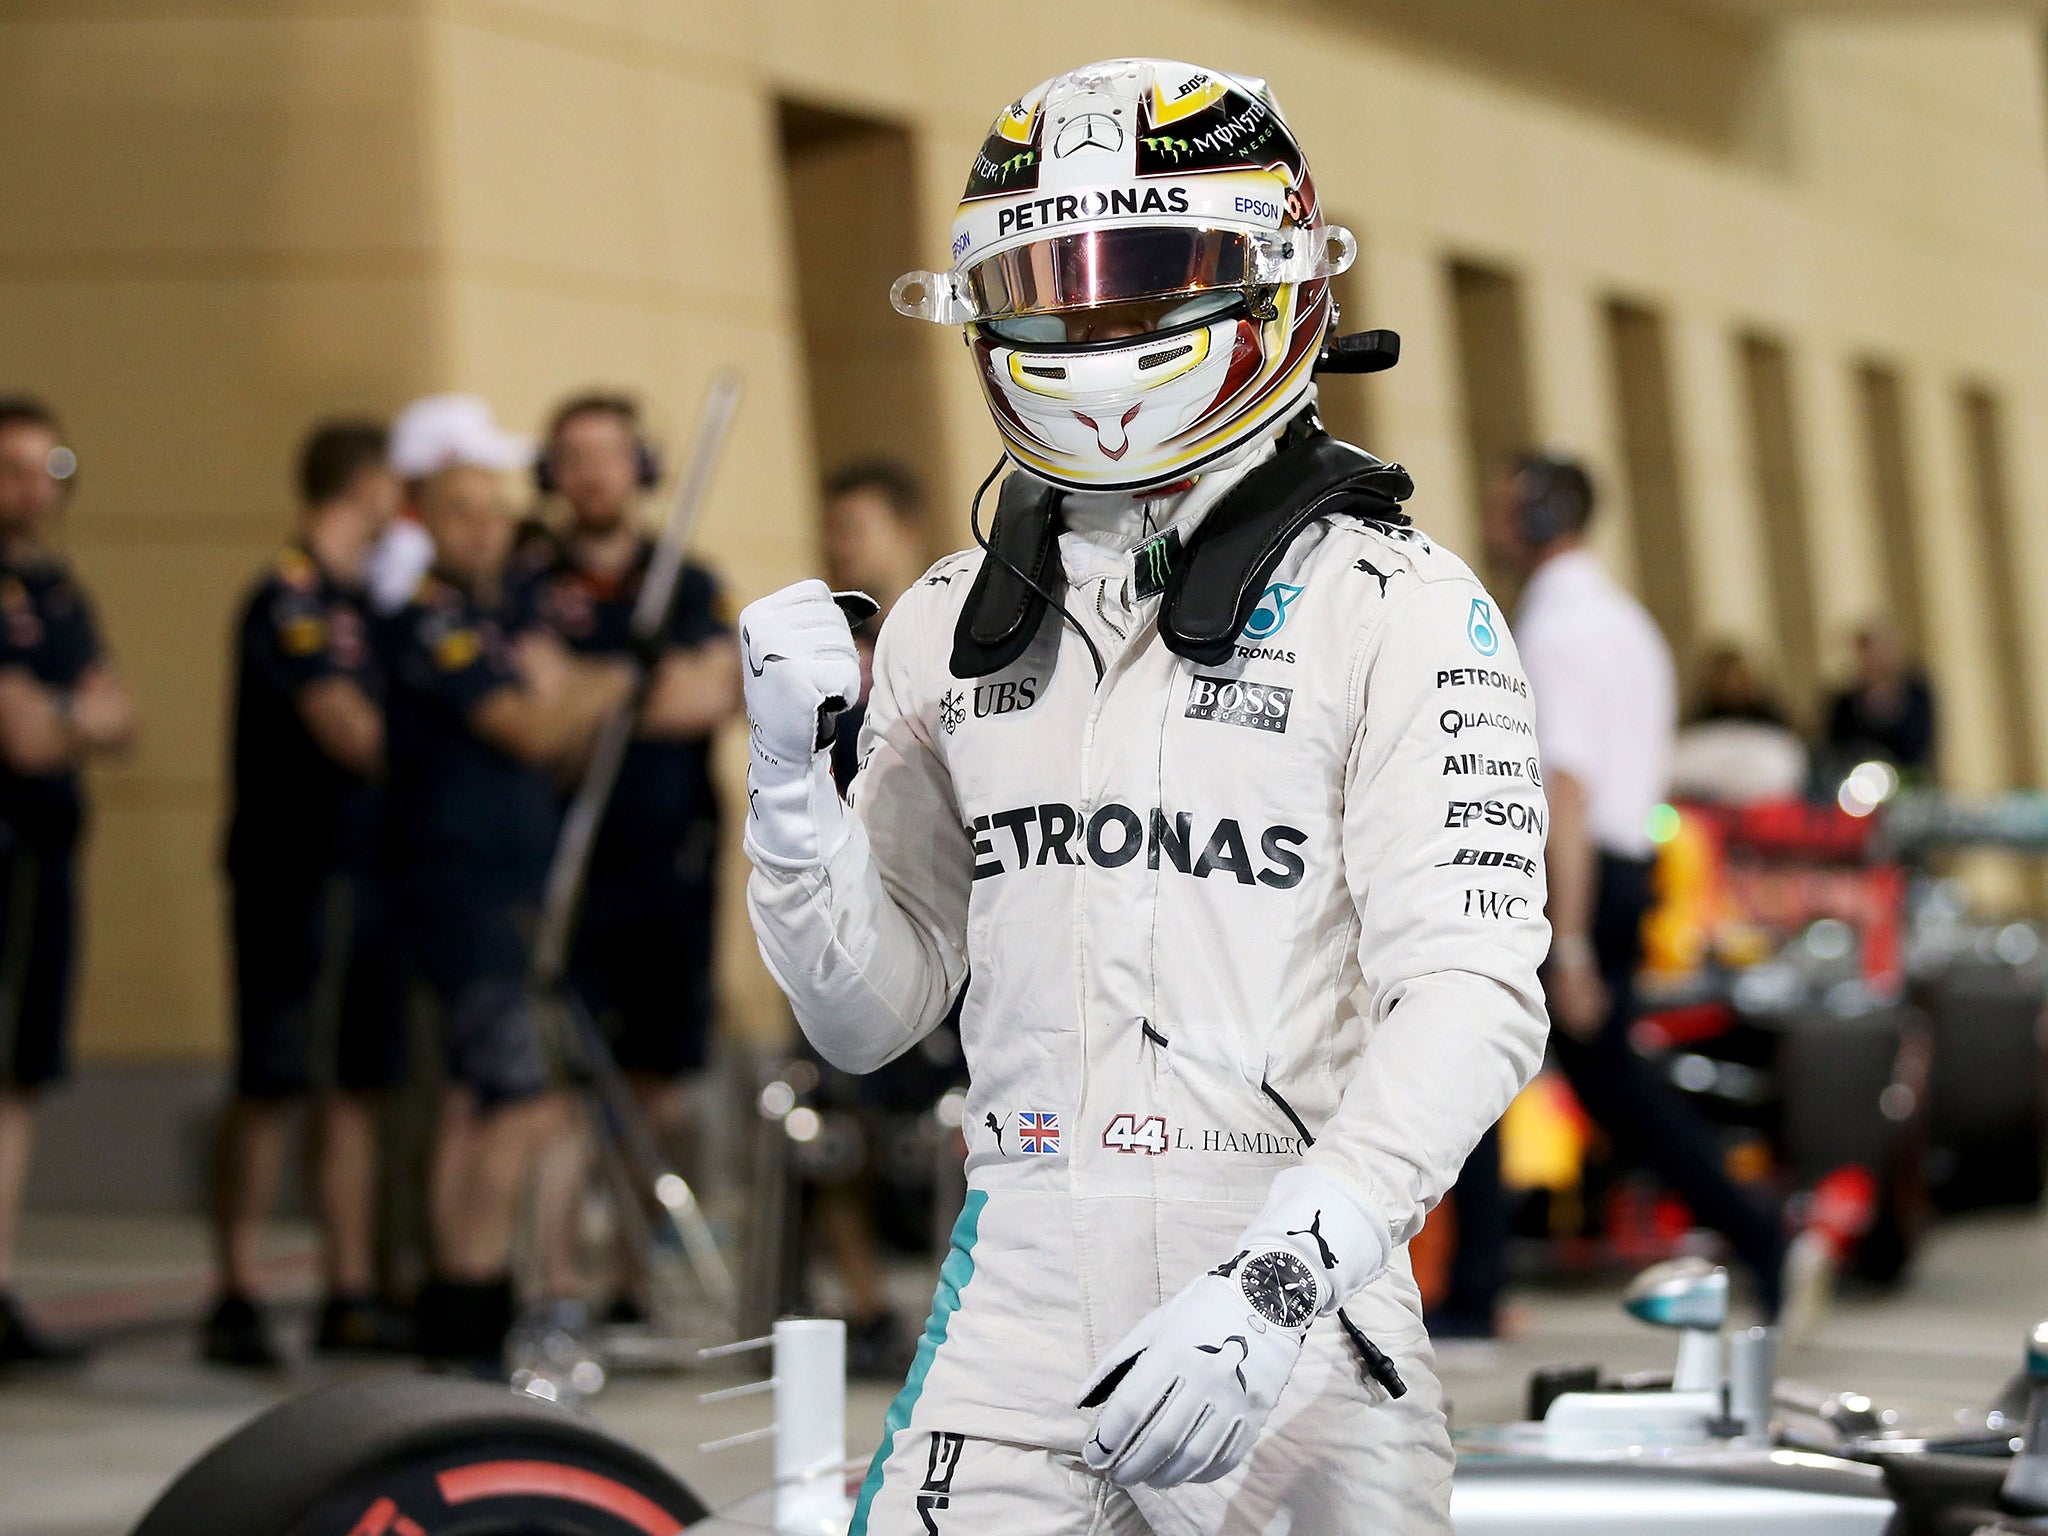 Lewis Hamilton celebrates after securing pole position for the Bahrain Grand Prix